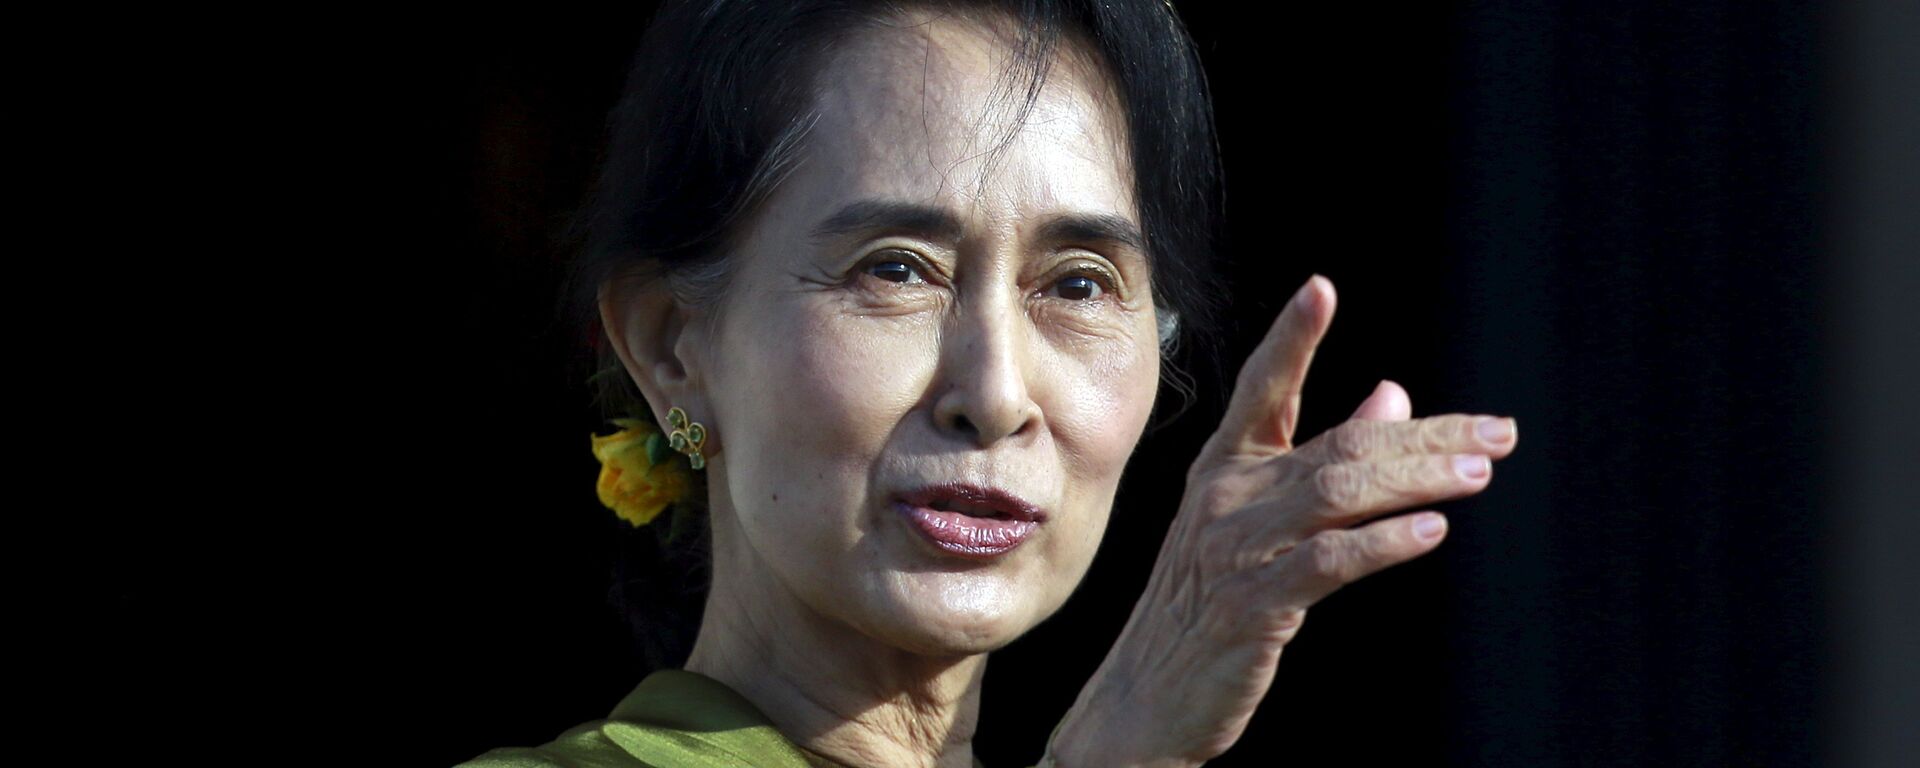 La consejera de Estado de Myanmar, Aung San Suu Kyi - Sputnik Mundo, 1920, 16.02.2021